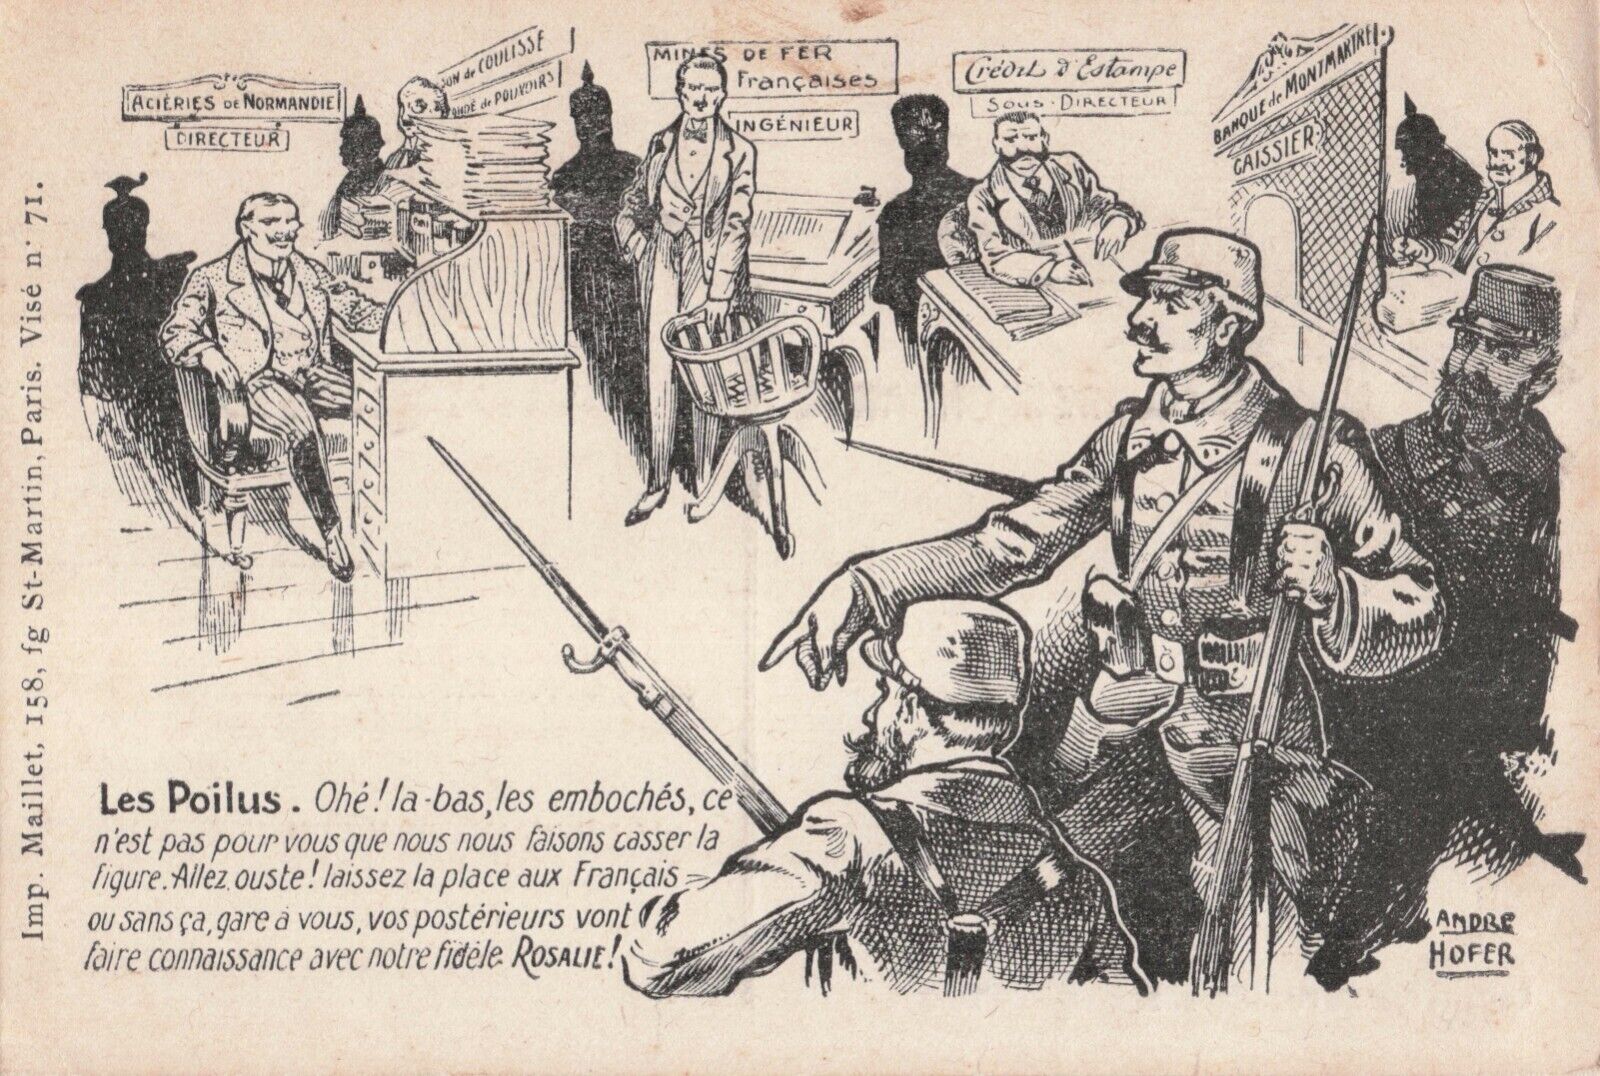 Artist Signed Andre Hofer French Satirical WWI Anti-German Postcard ca. 1916-17